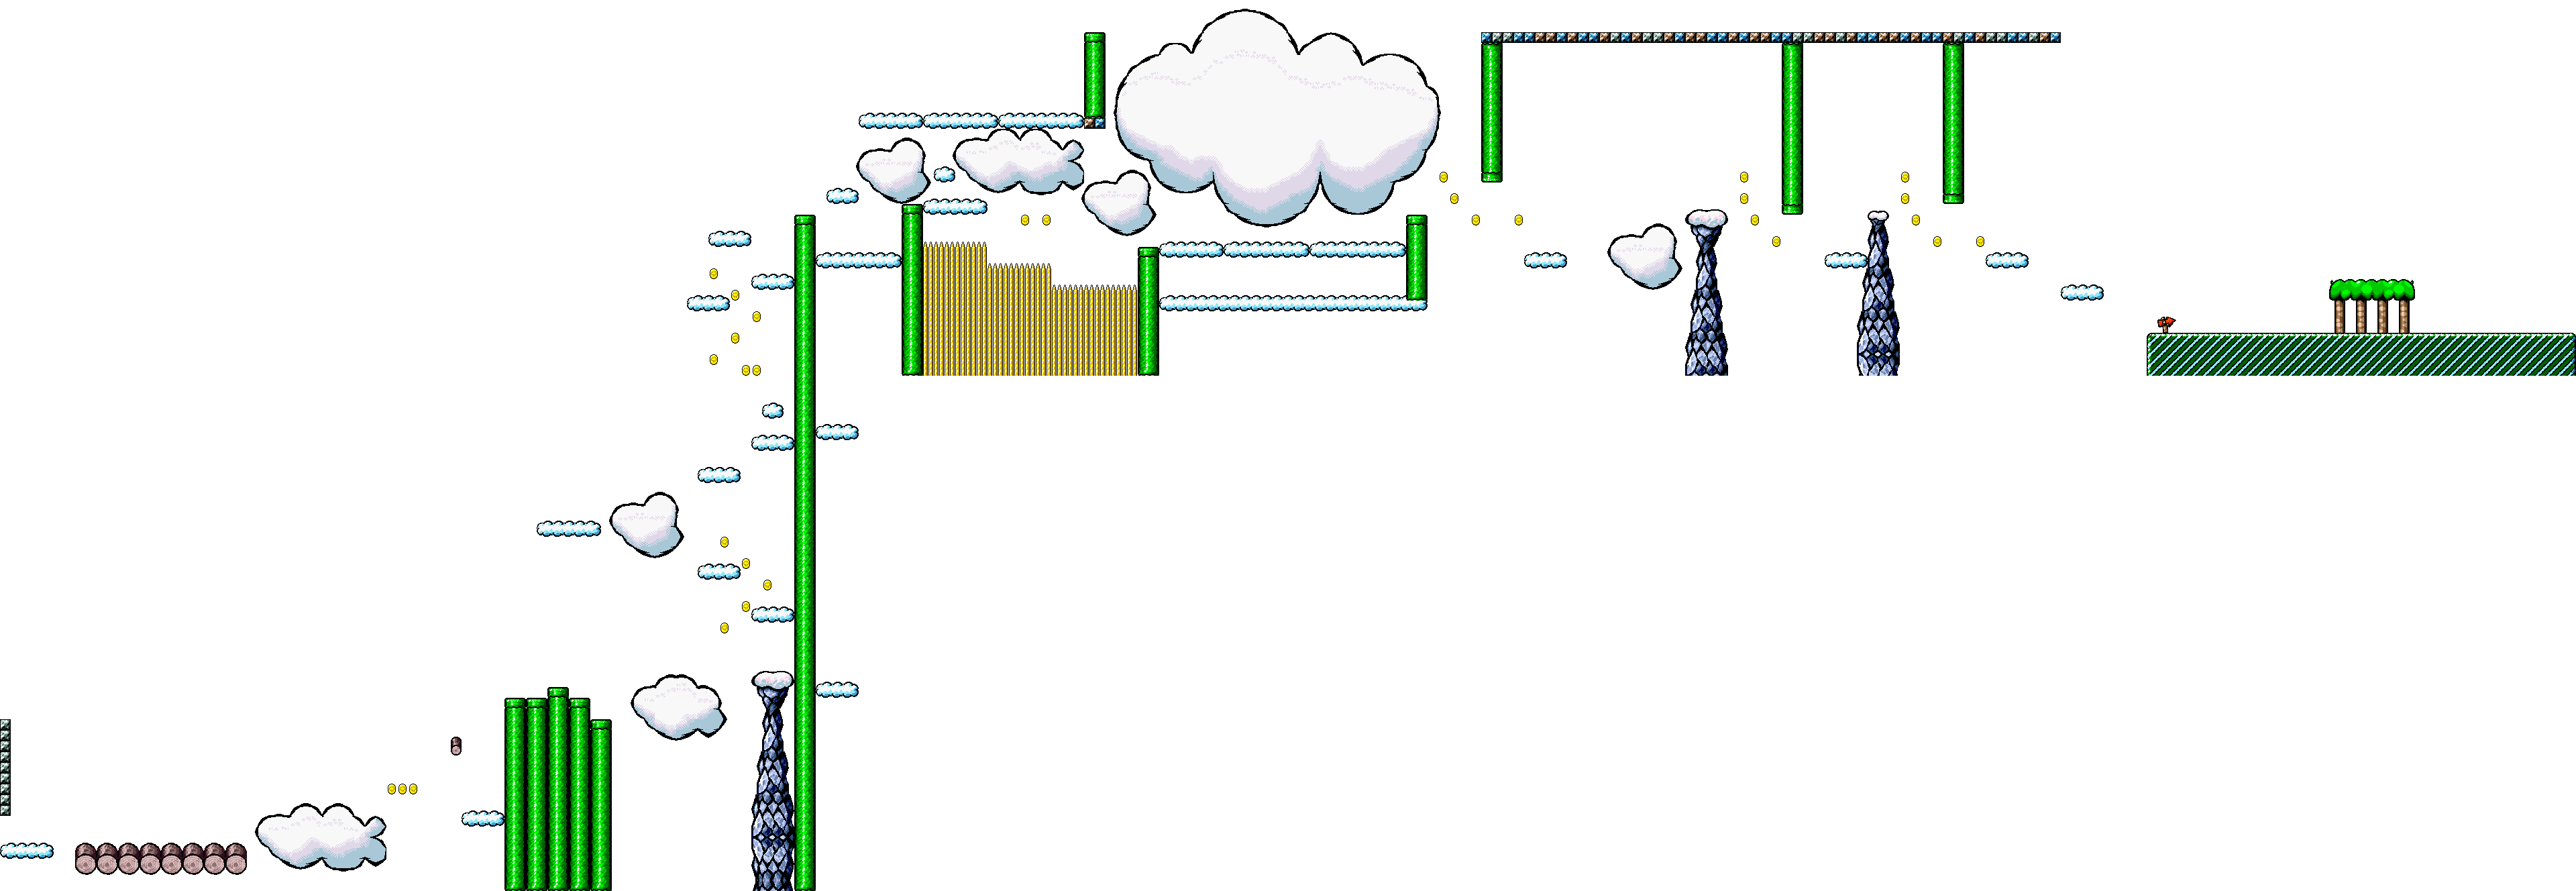 Super Mario World 2: Yoshi's Island - 5-6: Welcome To Cloud World (2/2)